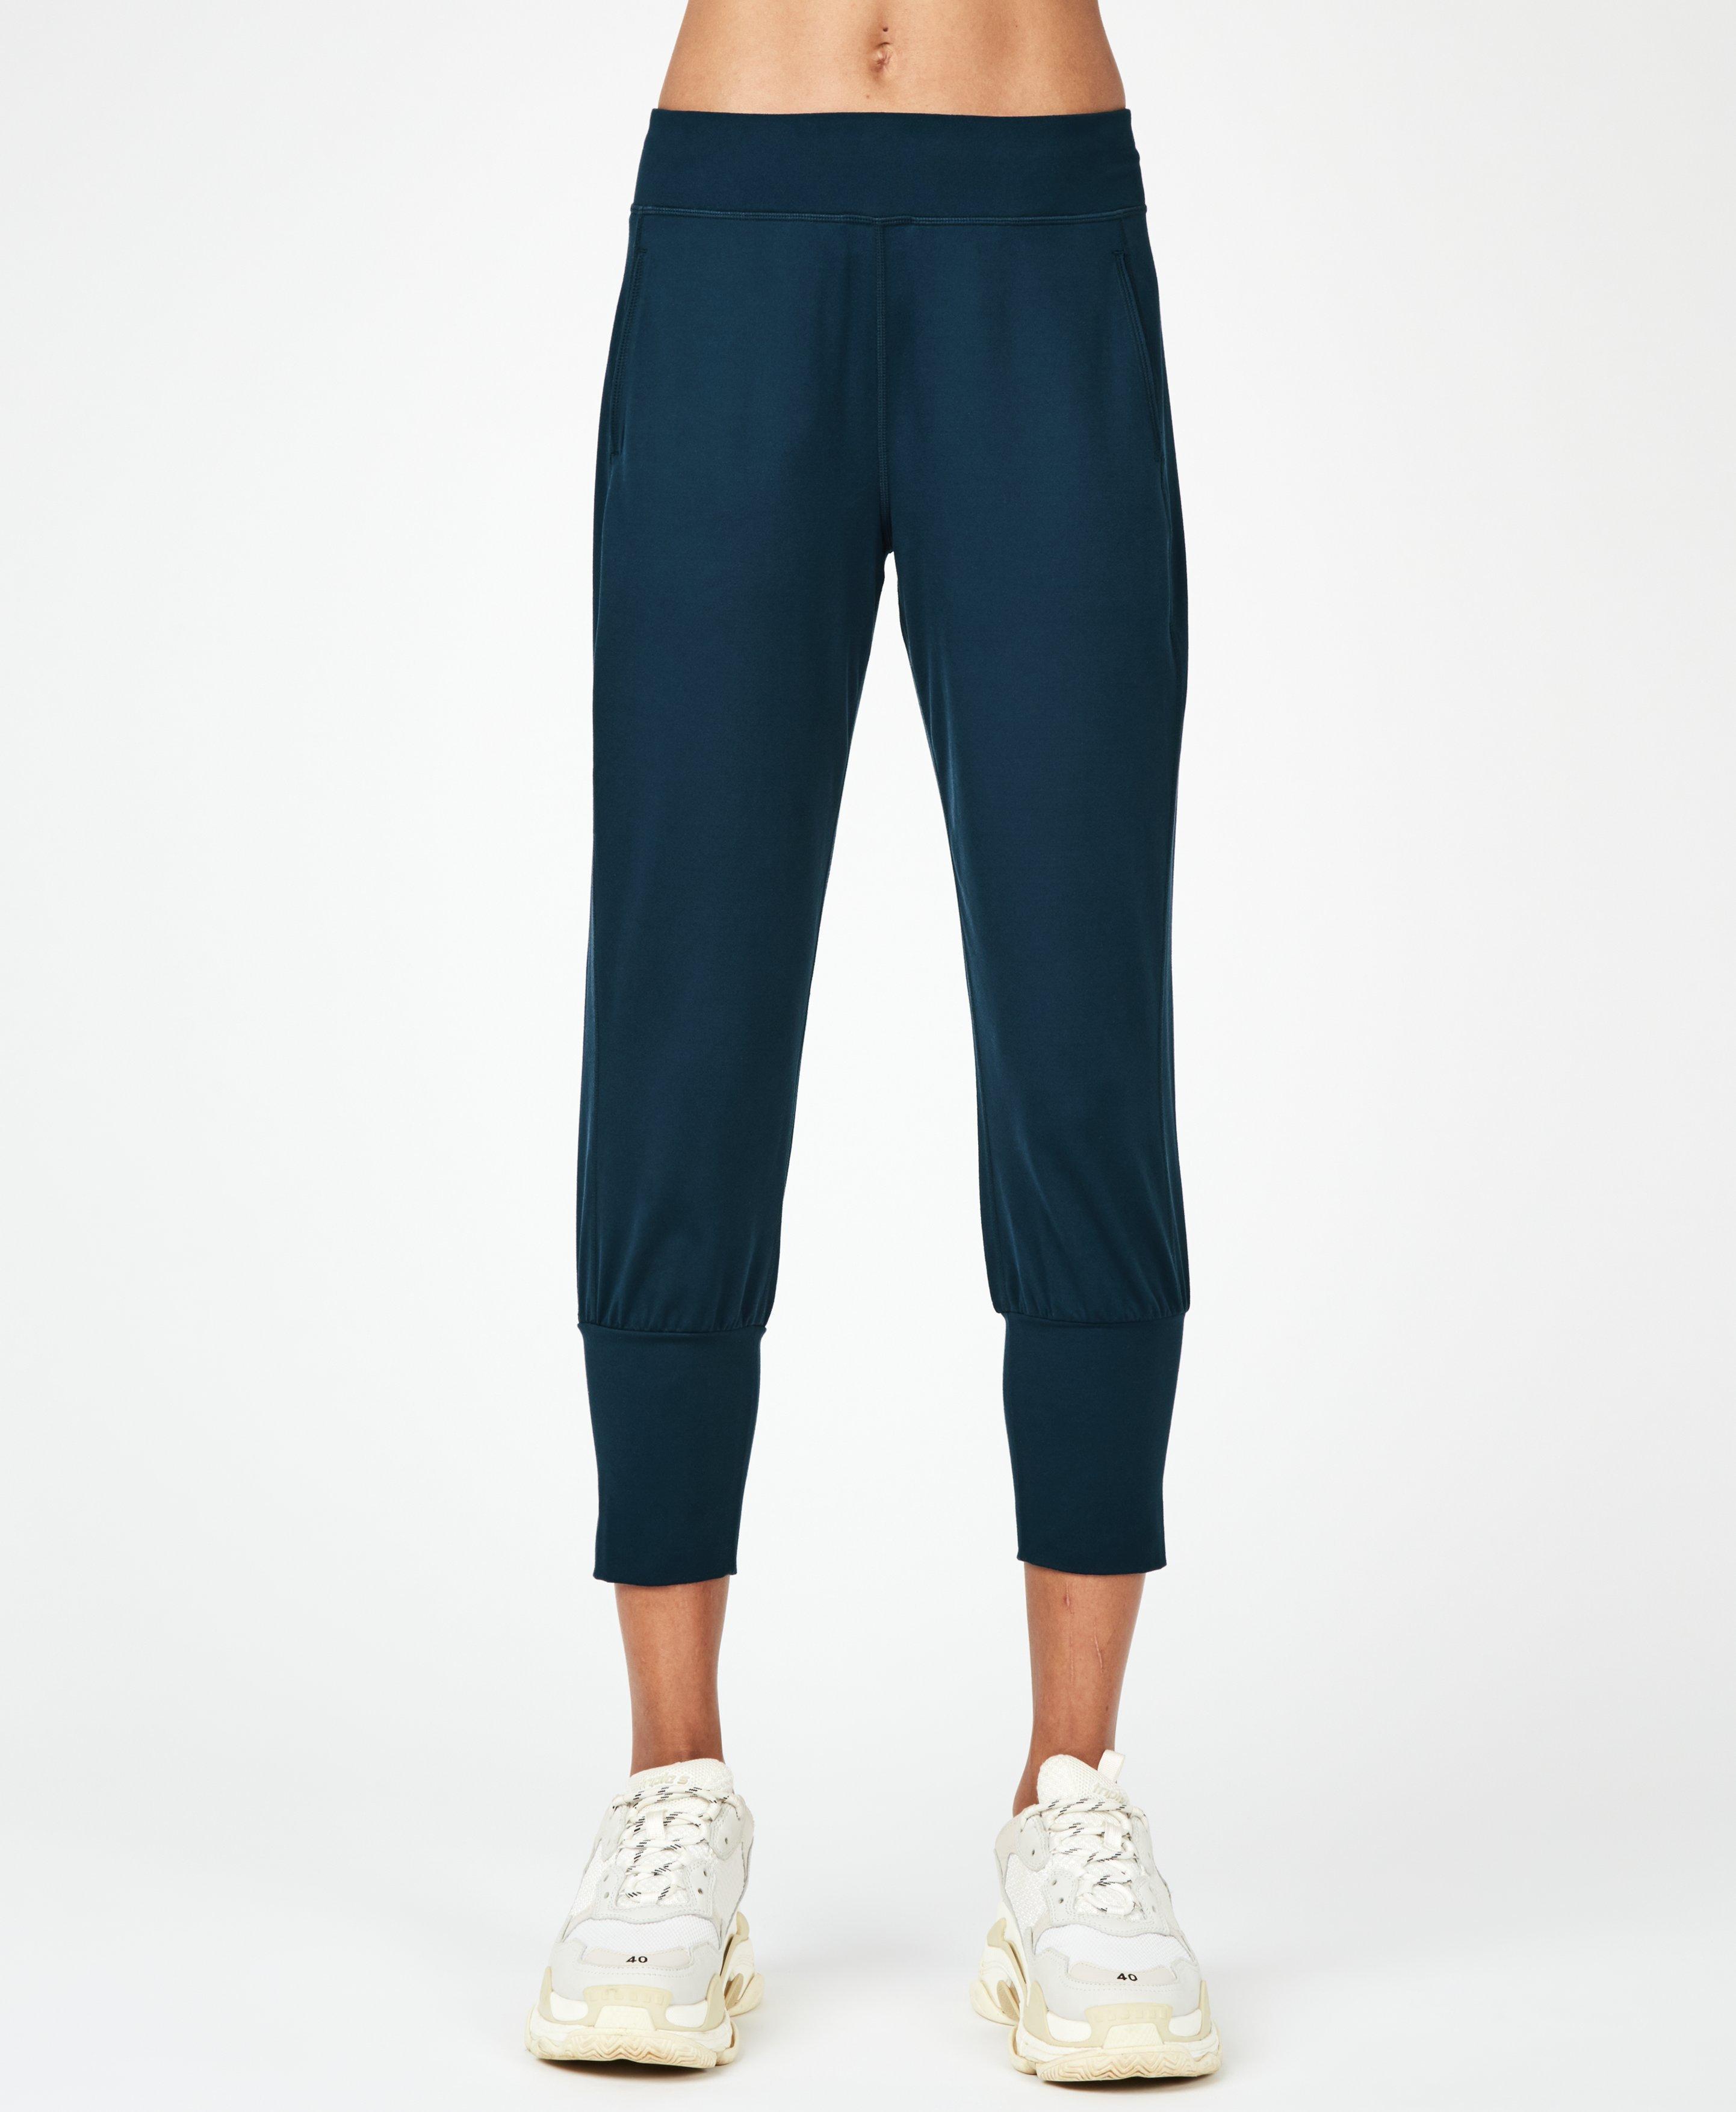 Sweaty Betty Gary Cropped Yoga Pants in Blue - Lyst